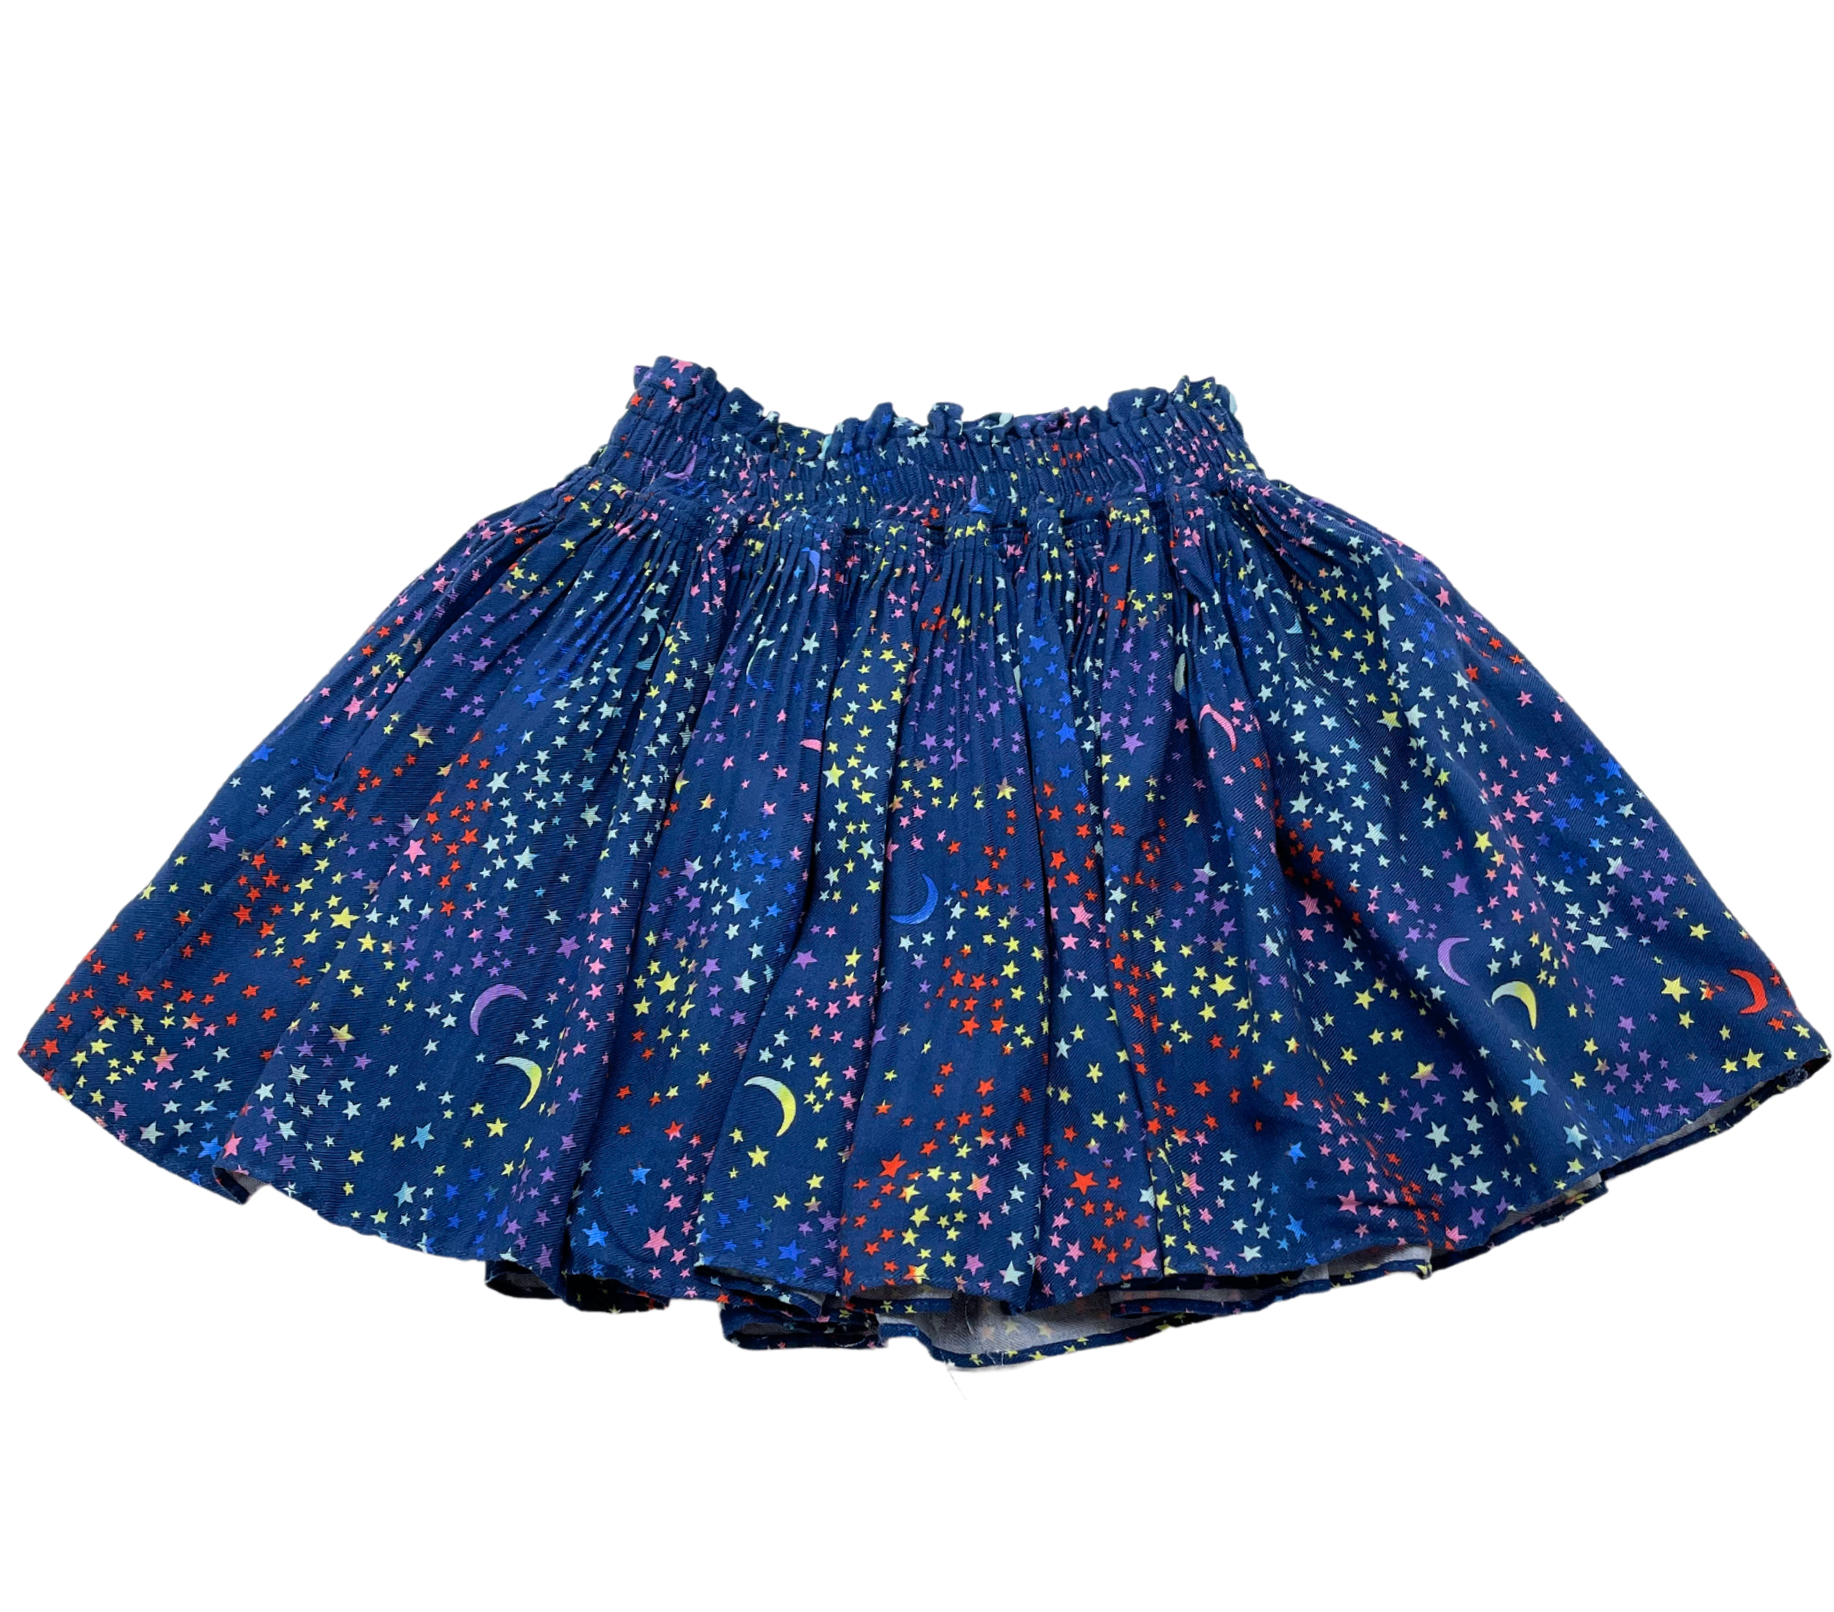 STELLA MCCARTNEY - Stars &amp; moon skirt - 6 years old